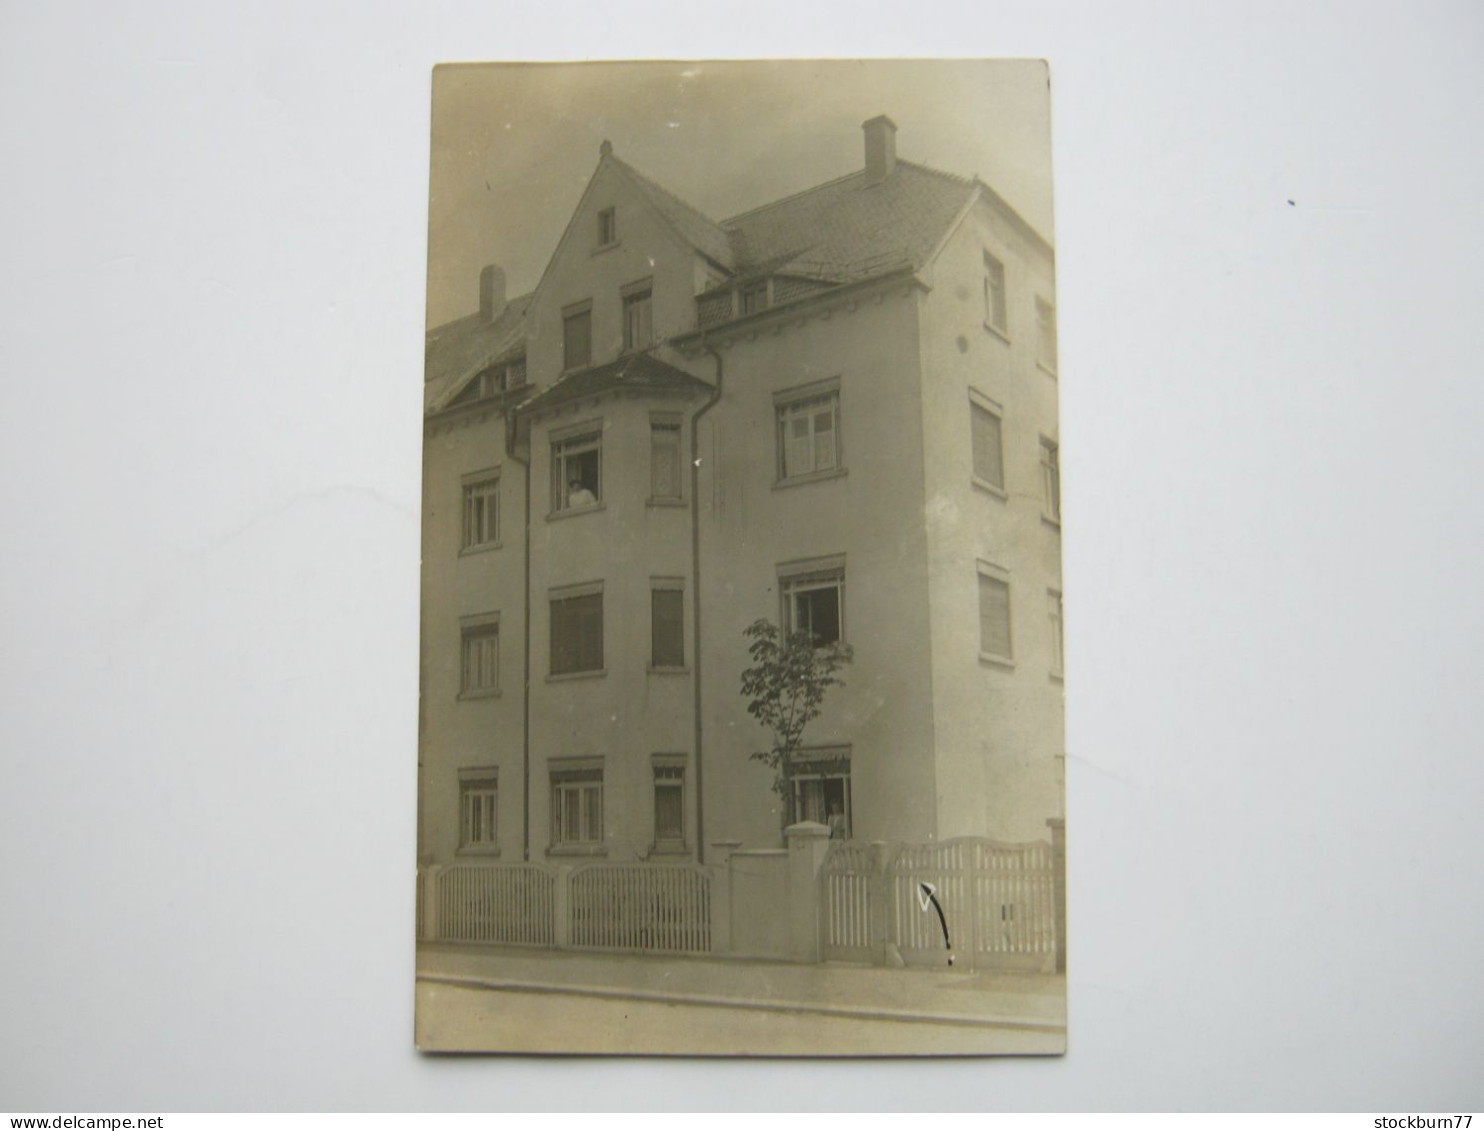 KAMENZ , Fotokarte , Hausnummer 32 Seltene Ansichtskarte Um 1911 - Kamenz